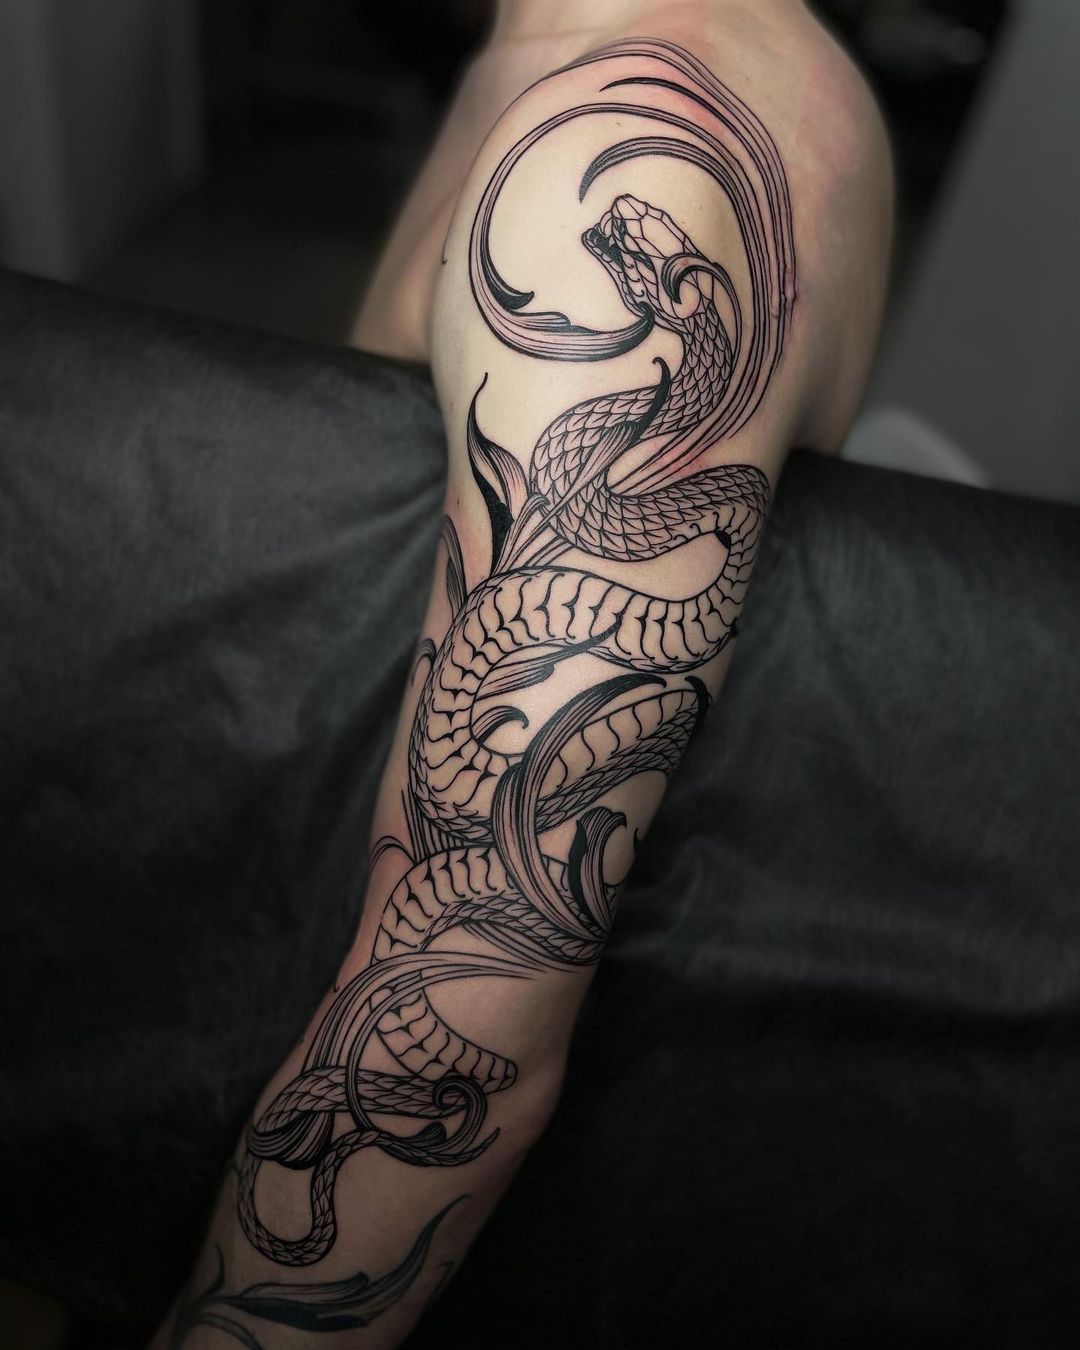 Snake tattoo for men by ungoliant.art